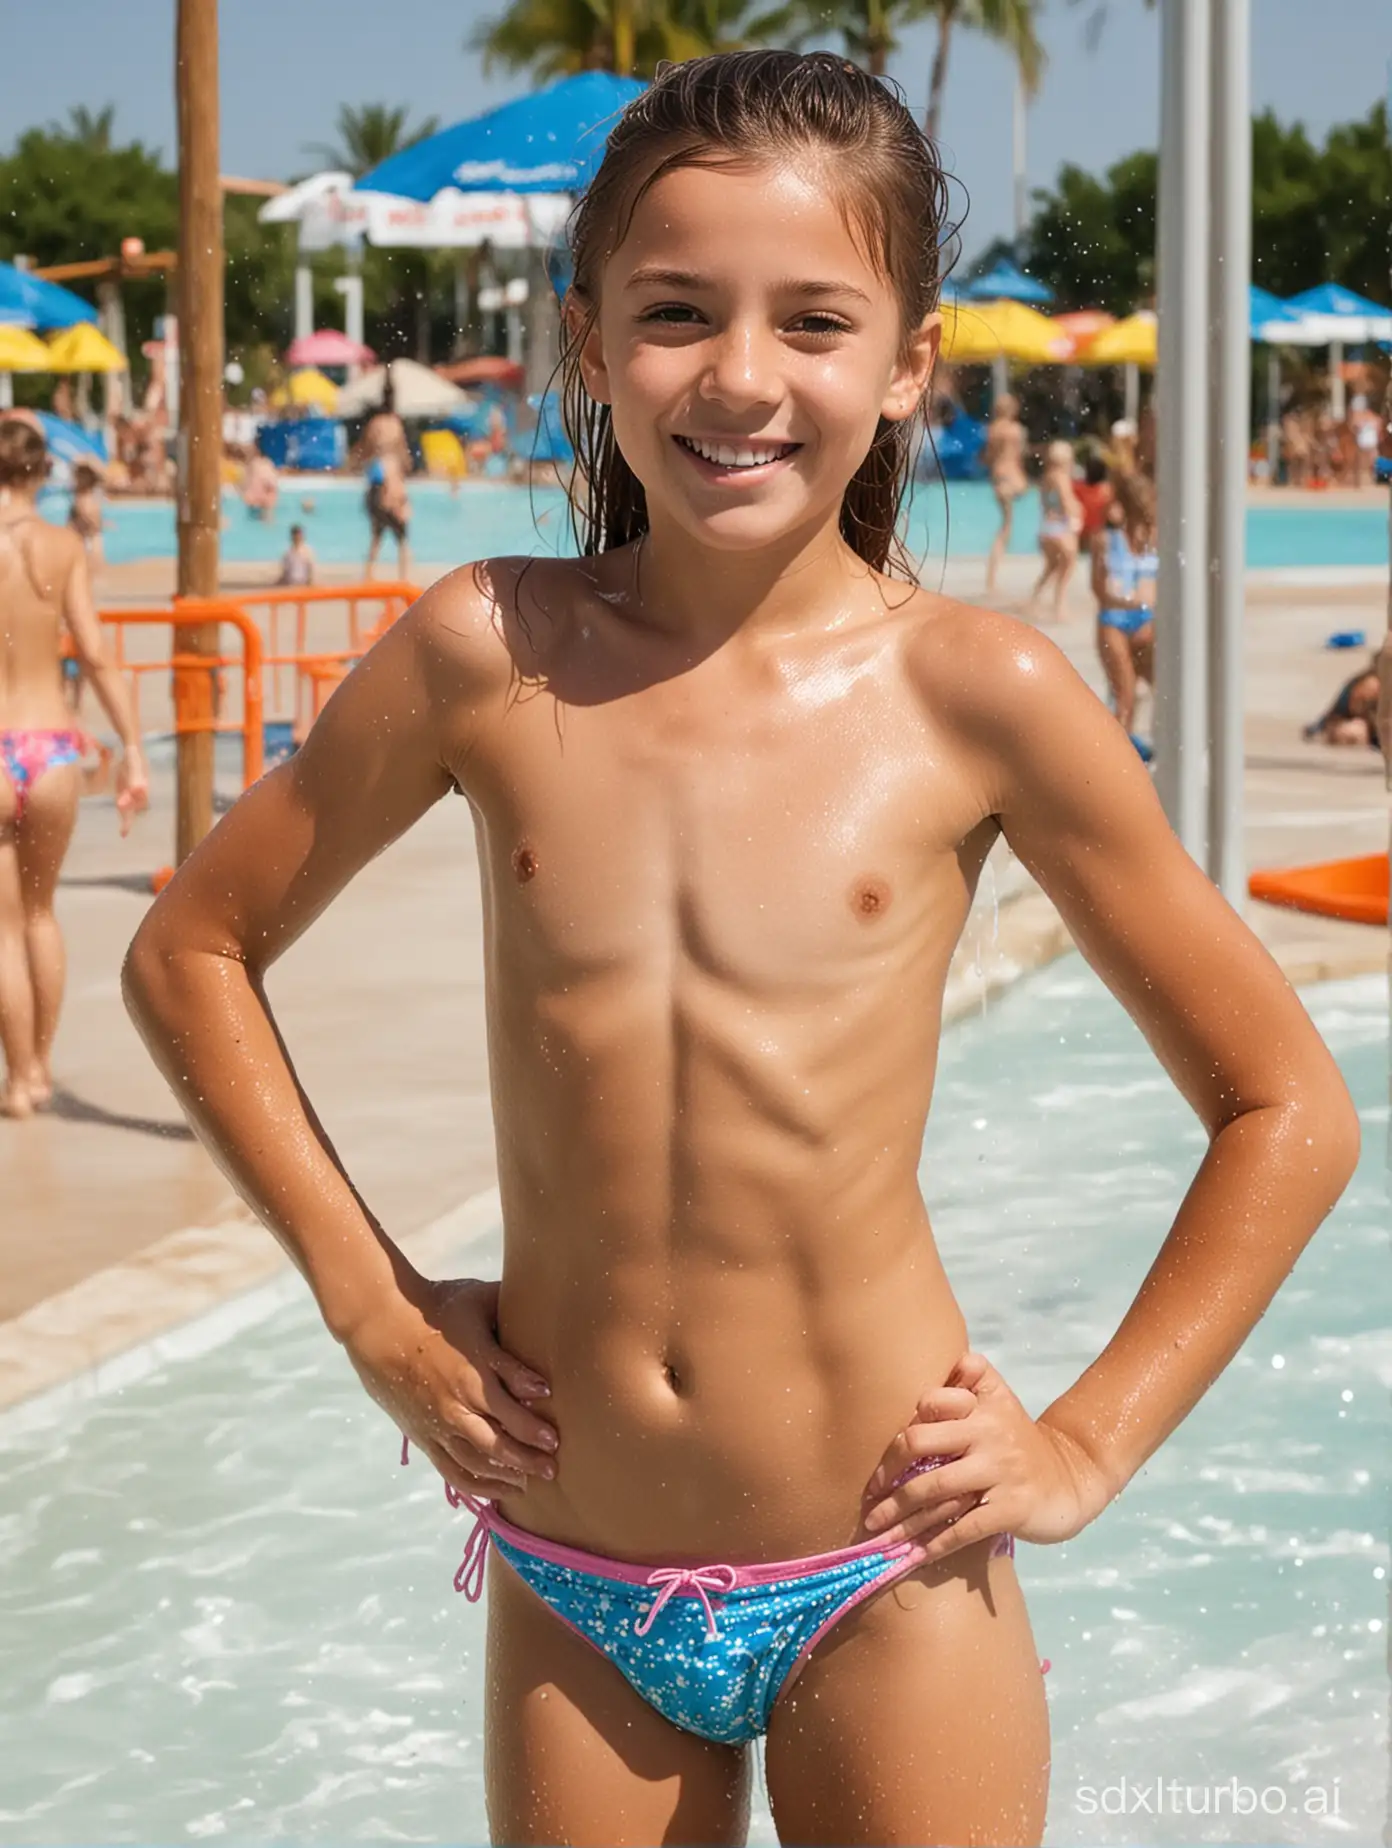 7YearOld-Girl-Enjoying-Water-Park-Adventure-with-Muscular-Rib-Display